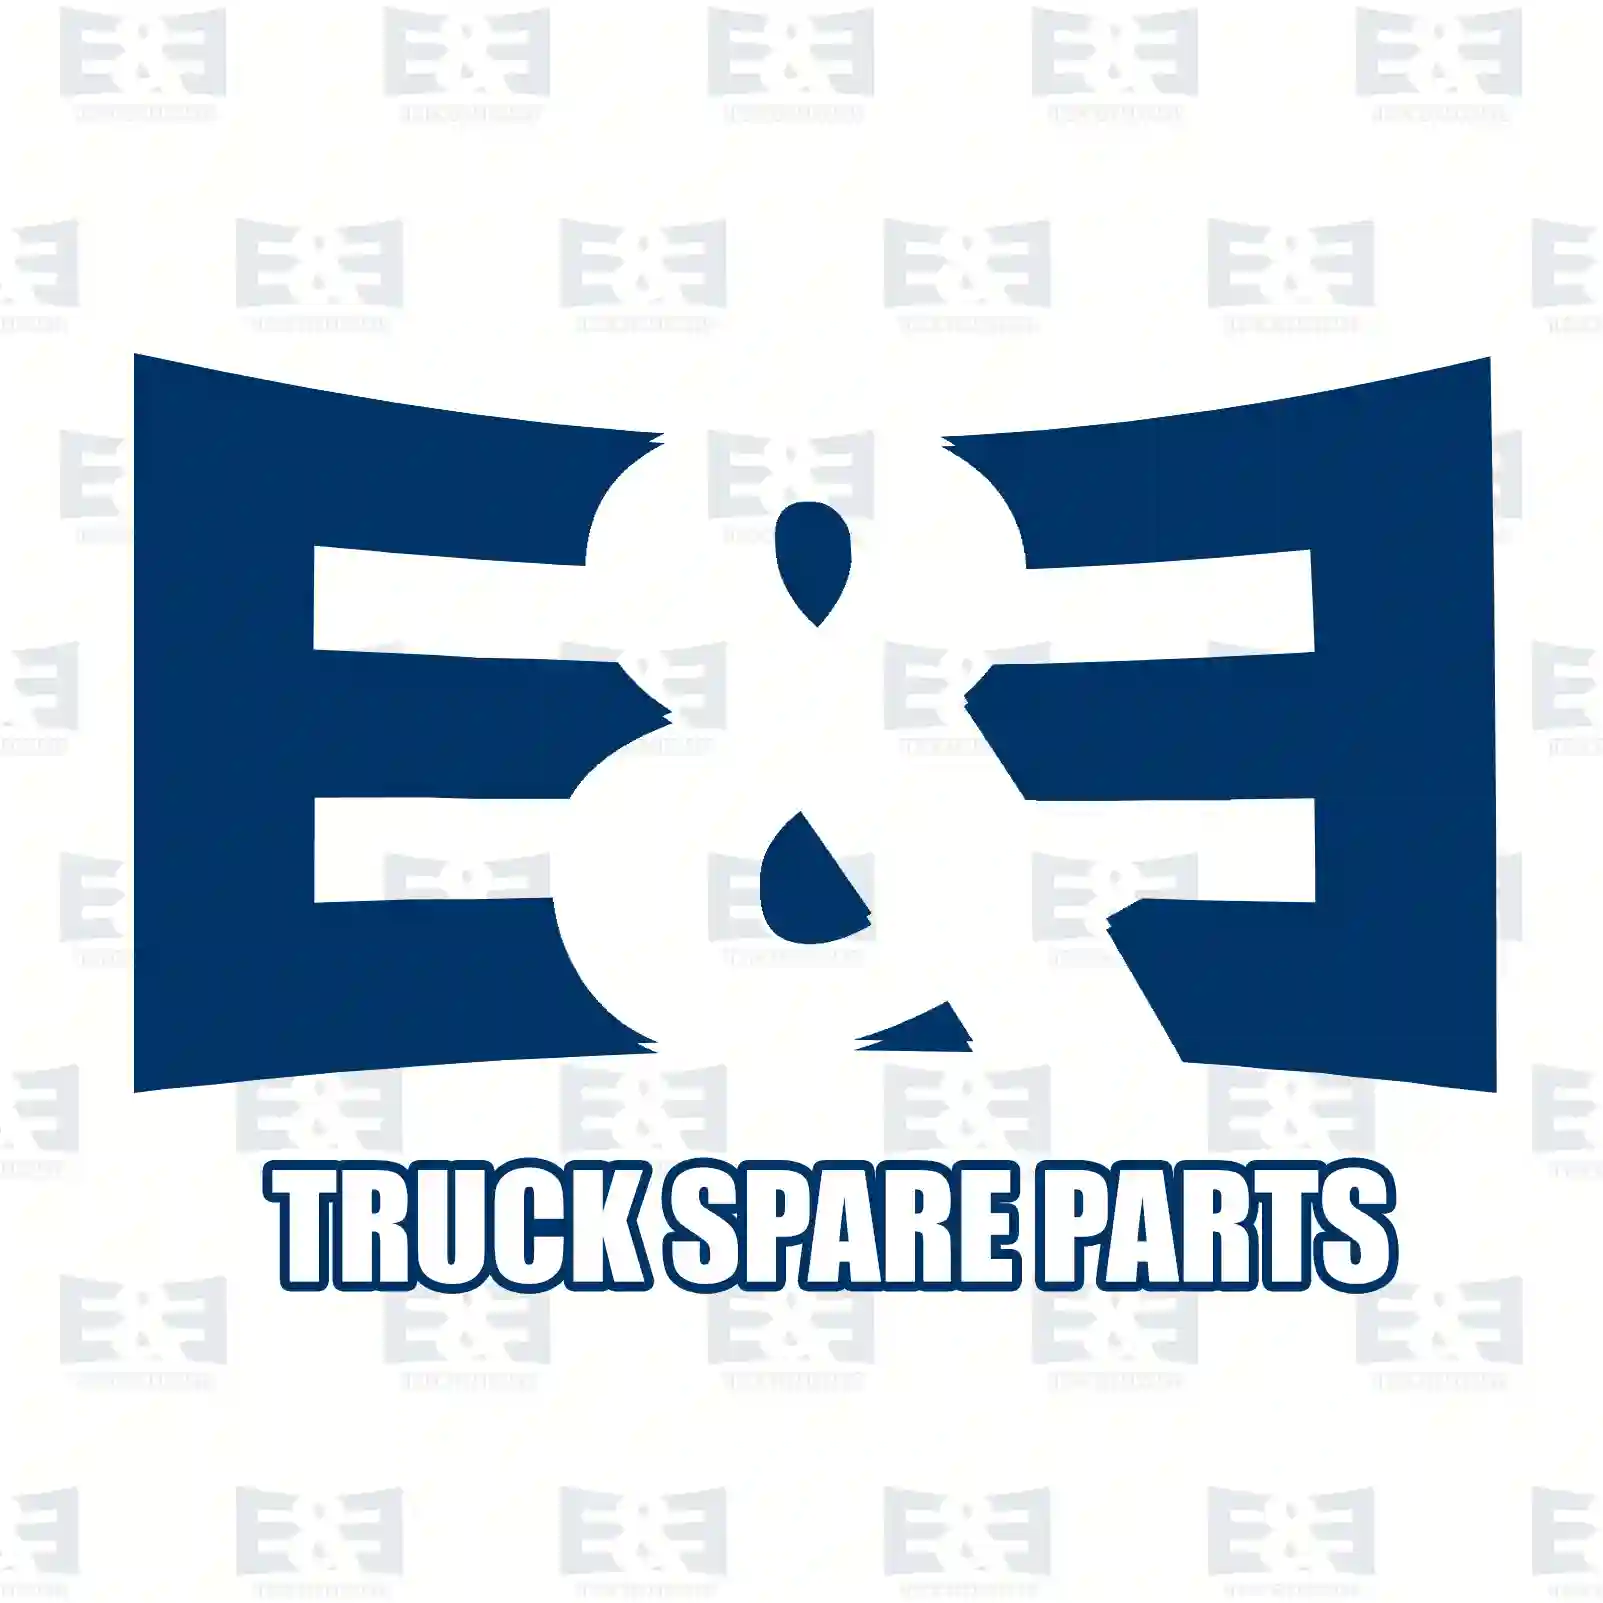 Belts V-belt kit, EE No 2E2286387 ,  oem no:1816444, 06580432227, 06580452227, 06580482227, 06580722272, 06580732272, 51968206009, 51968206017, 0039970592 E&E Truck Spare Parts | Truck Spare Parts, Auotomotive Spare Parts